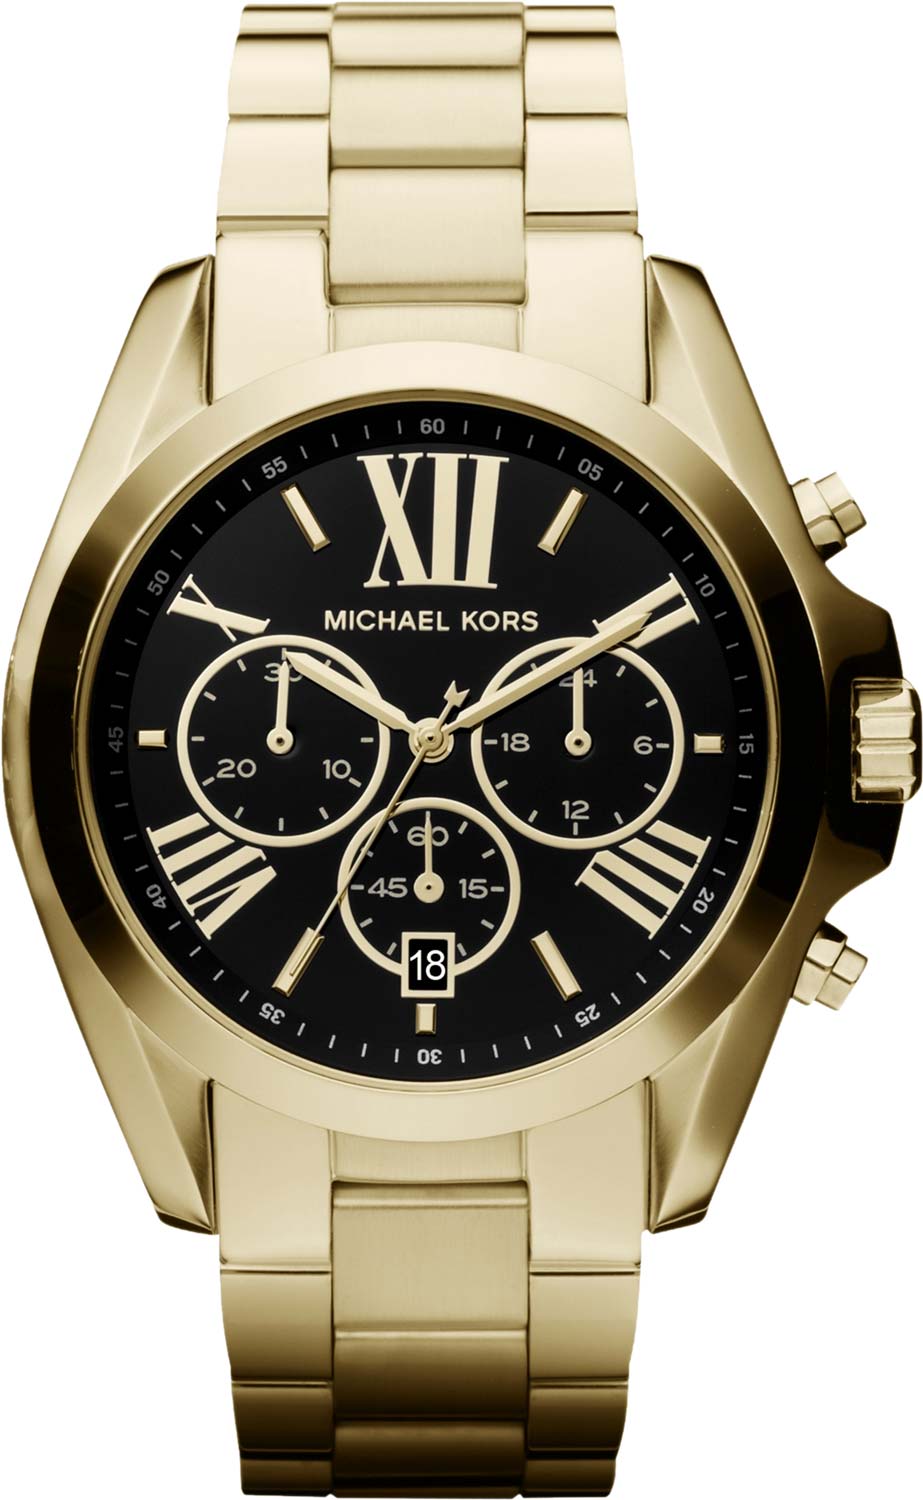 Наручные часы Michael Kors MK5739 с хронографом